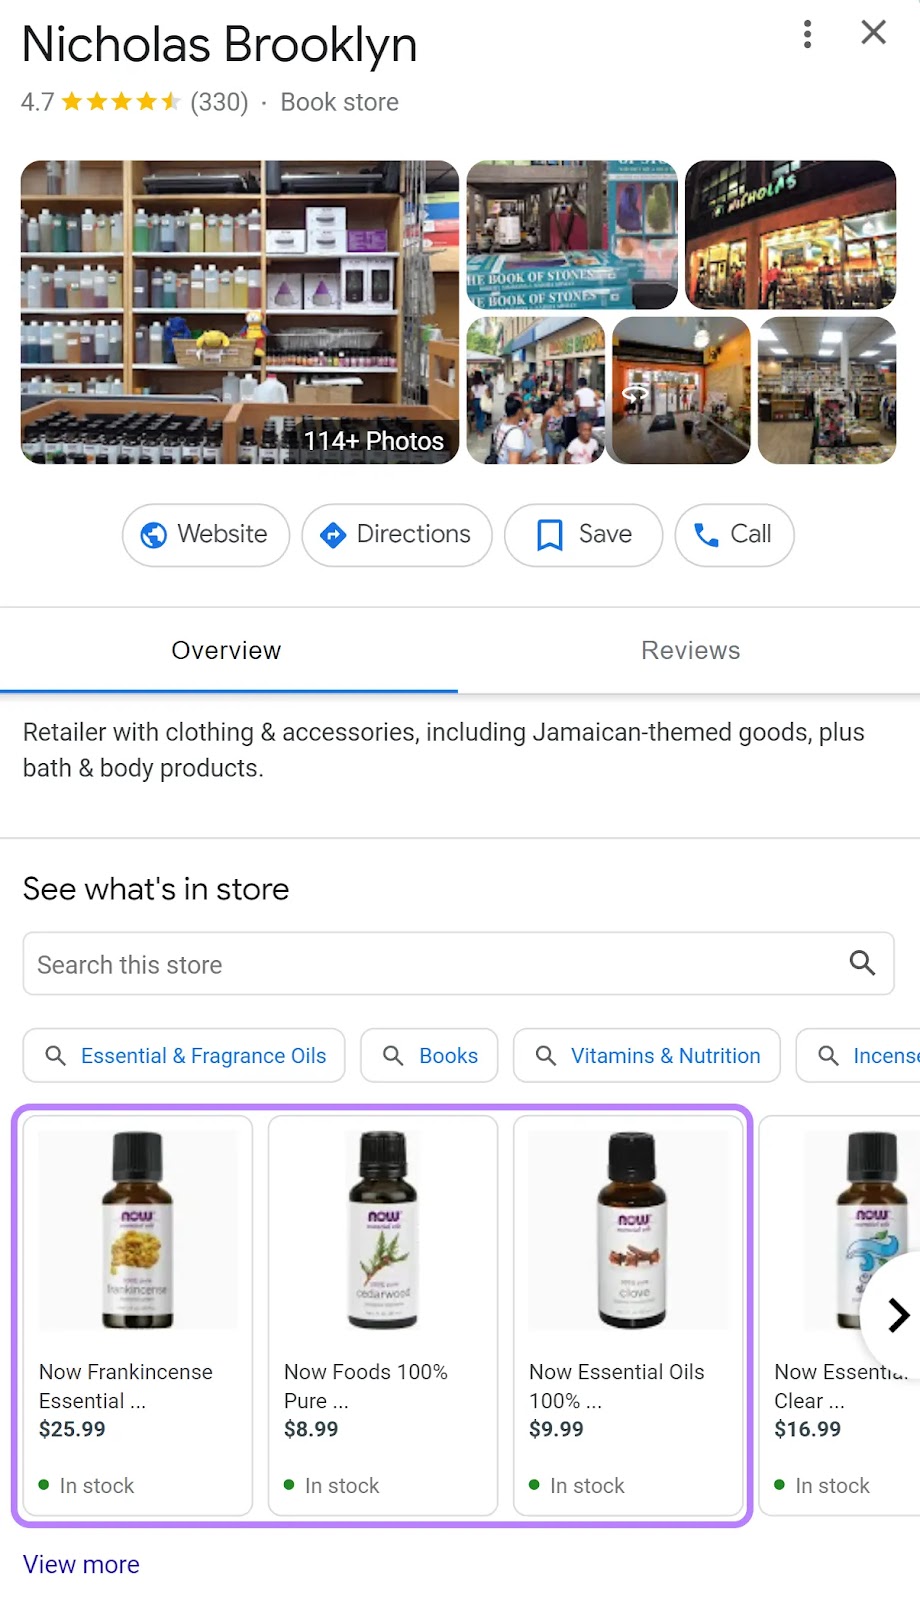 Nicholas Brooklyn's Google Business Profile merchandise  post